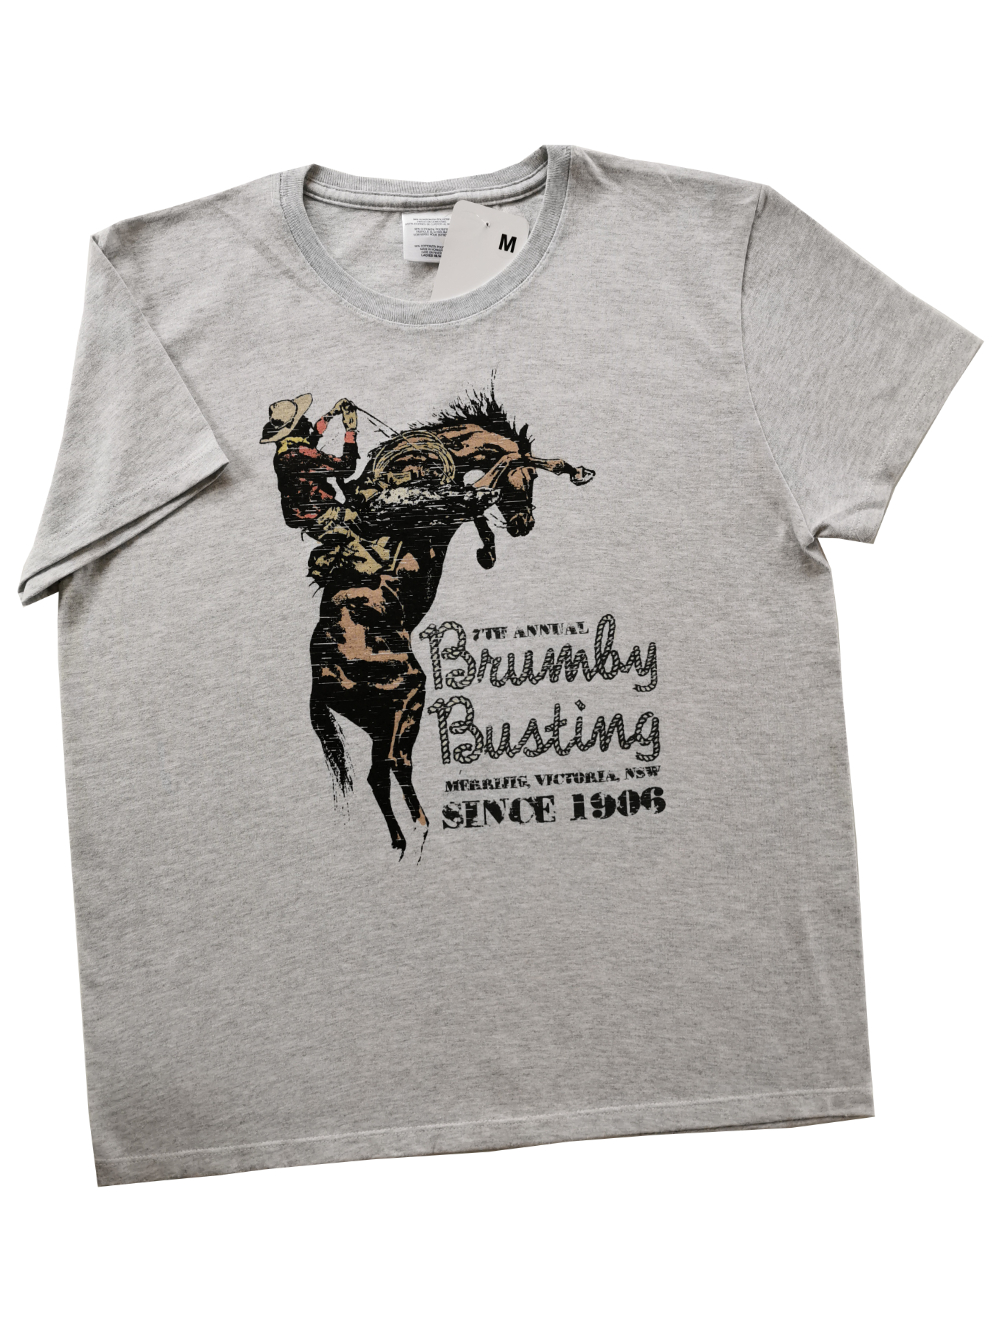 Damen T-Shirt "Brumby Busting", grau